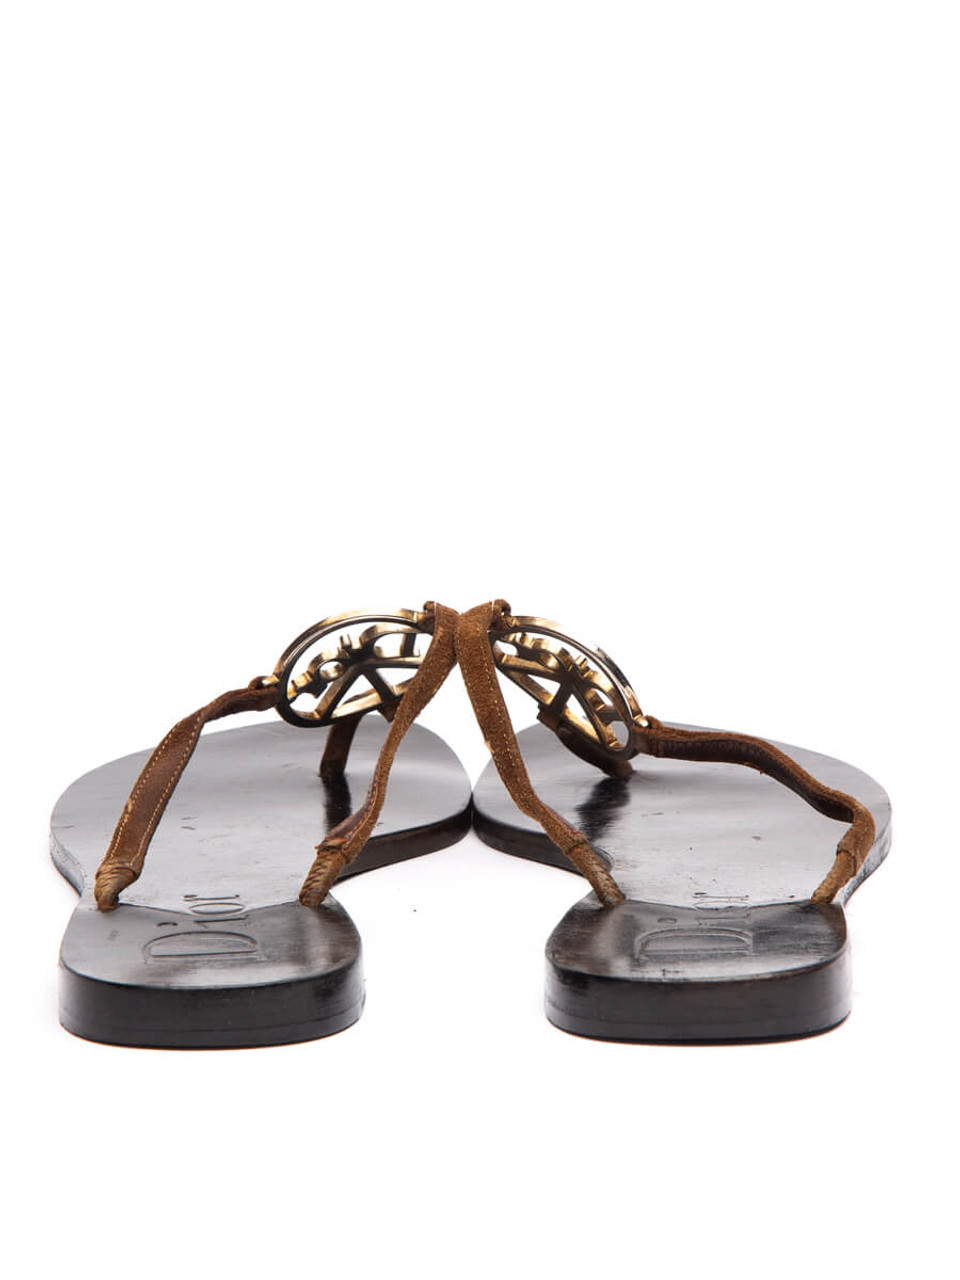 Christian Dior Logo Sandals, Size 7 UK, Brown Wood